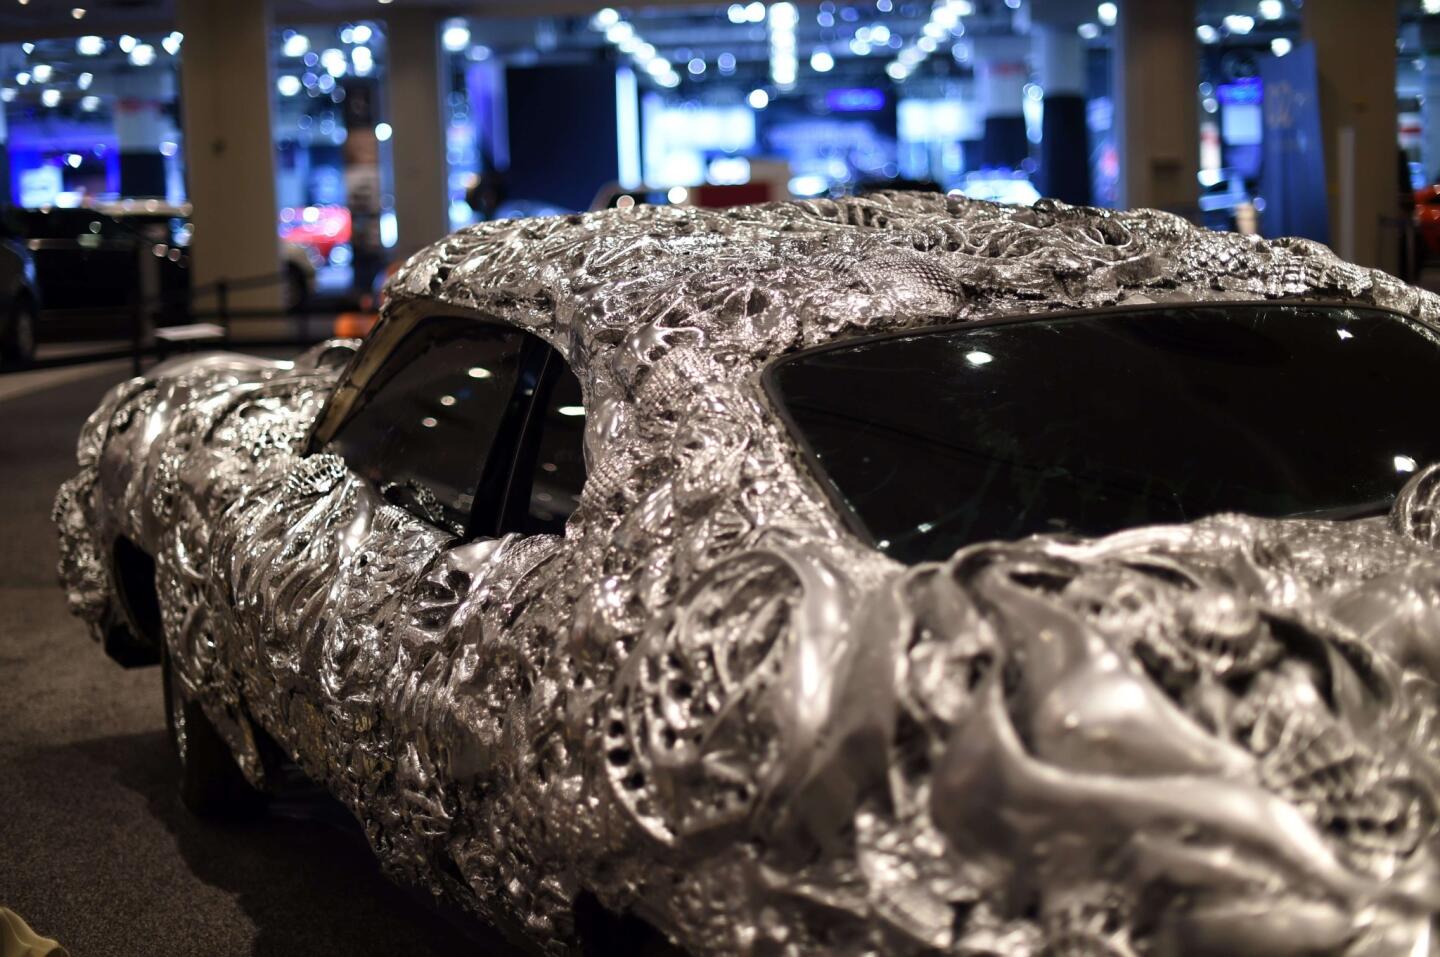 2014 New York Auto Show